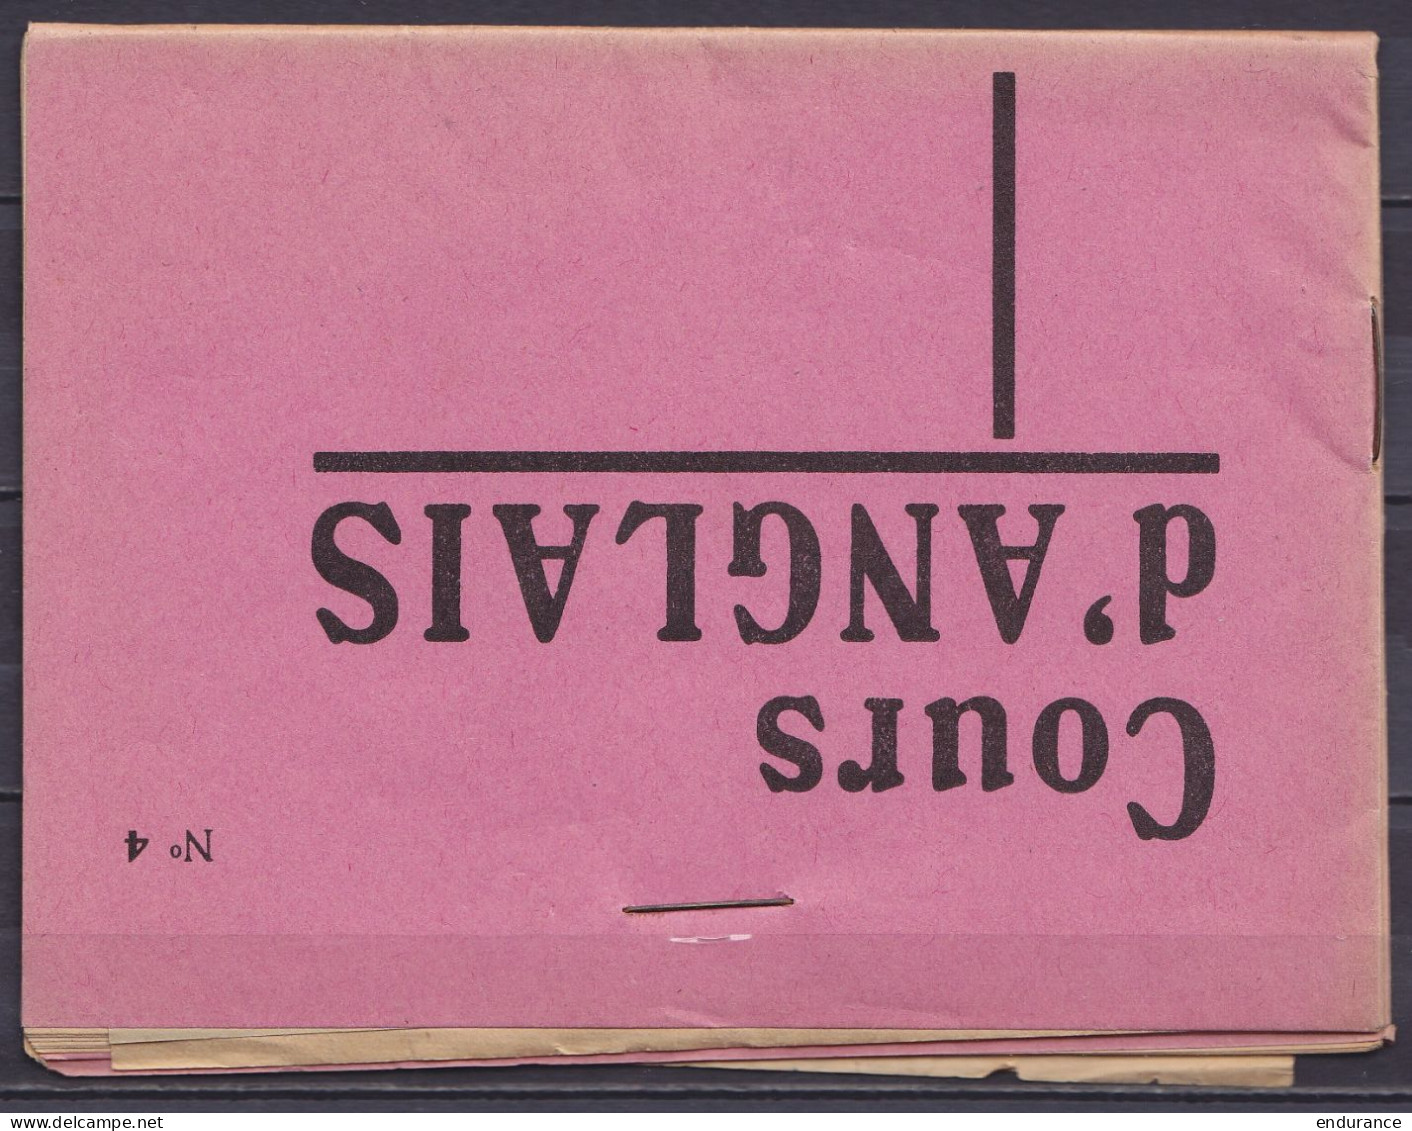 Imprimé "Ecole De Langue Anglaise" Affr. PREO 10c (type N°420 Surch. [I-VII-44 / 30-VI-45] Pour IXELLES - Sobreimpresos 1936-51 (Sello Pequeno)